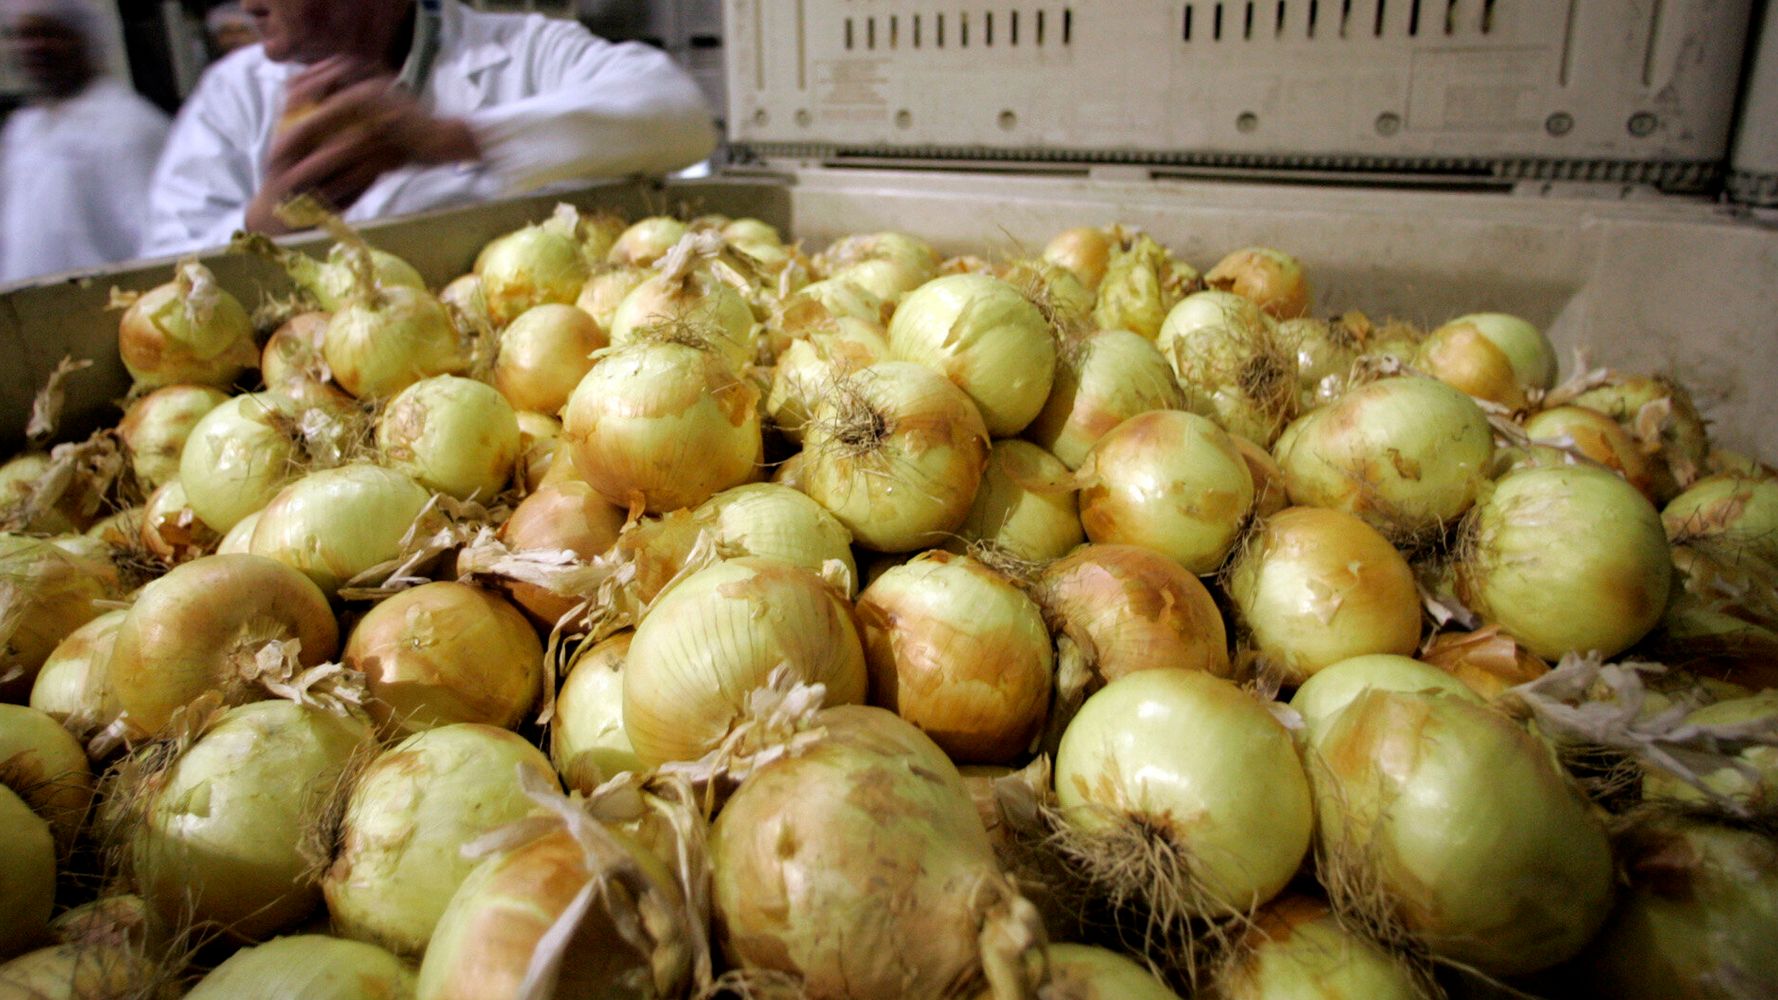 Precut Onions Caused Salmonella Outbreak, CDC Says